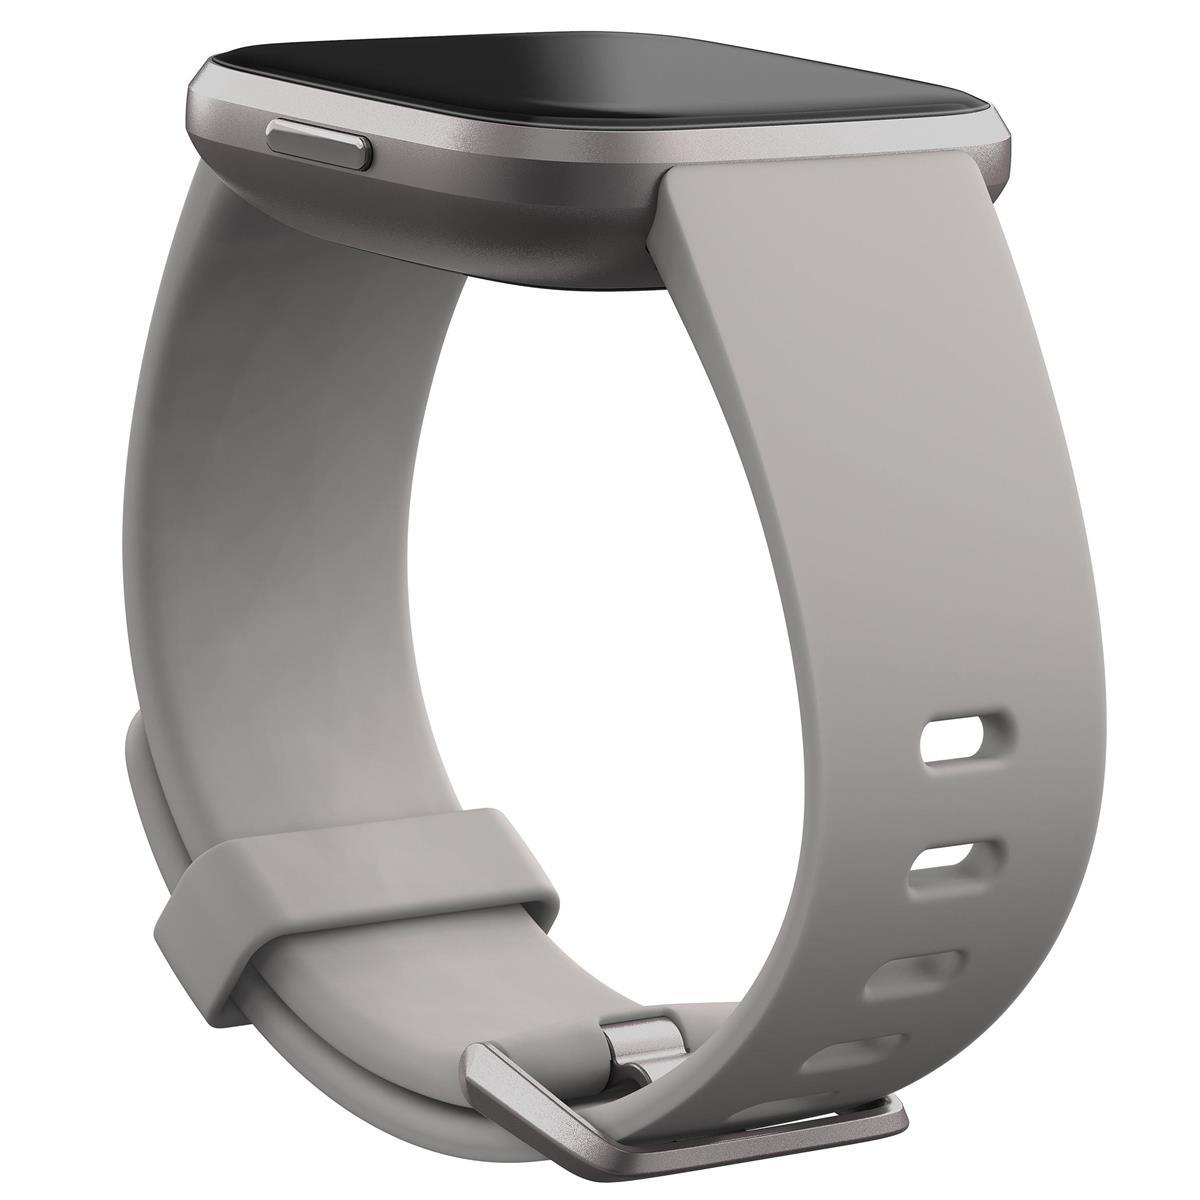 Fitbit Versa 2 Health and Fitness Smartwatch  Stone/Mist Gray Aluminum